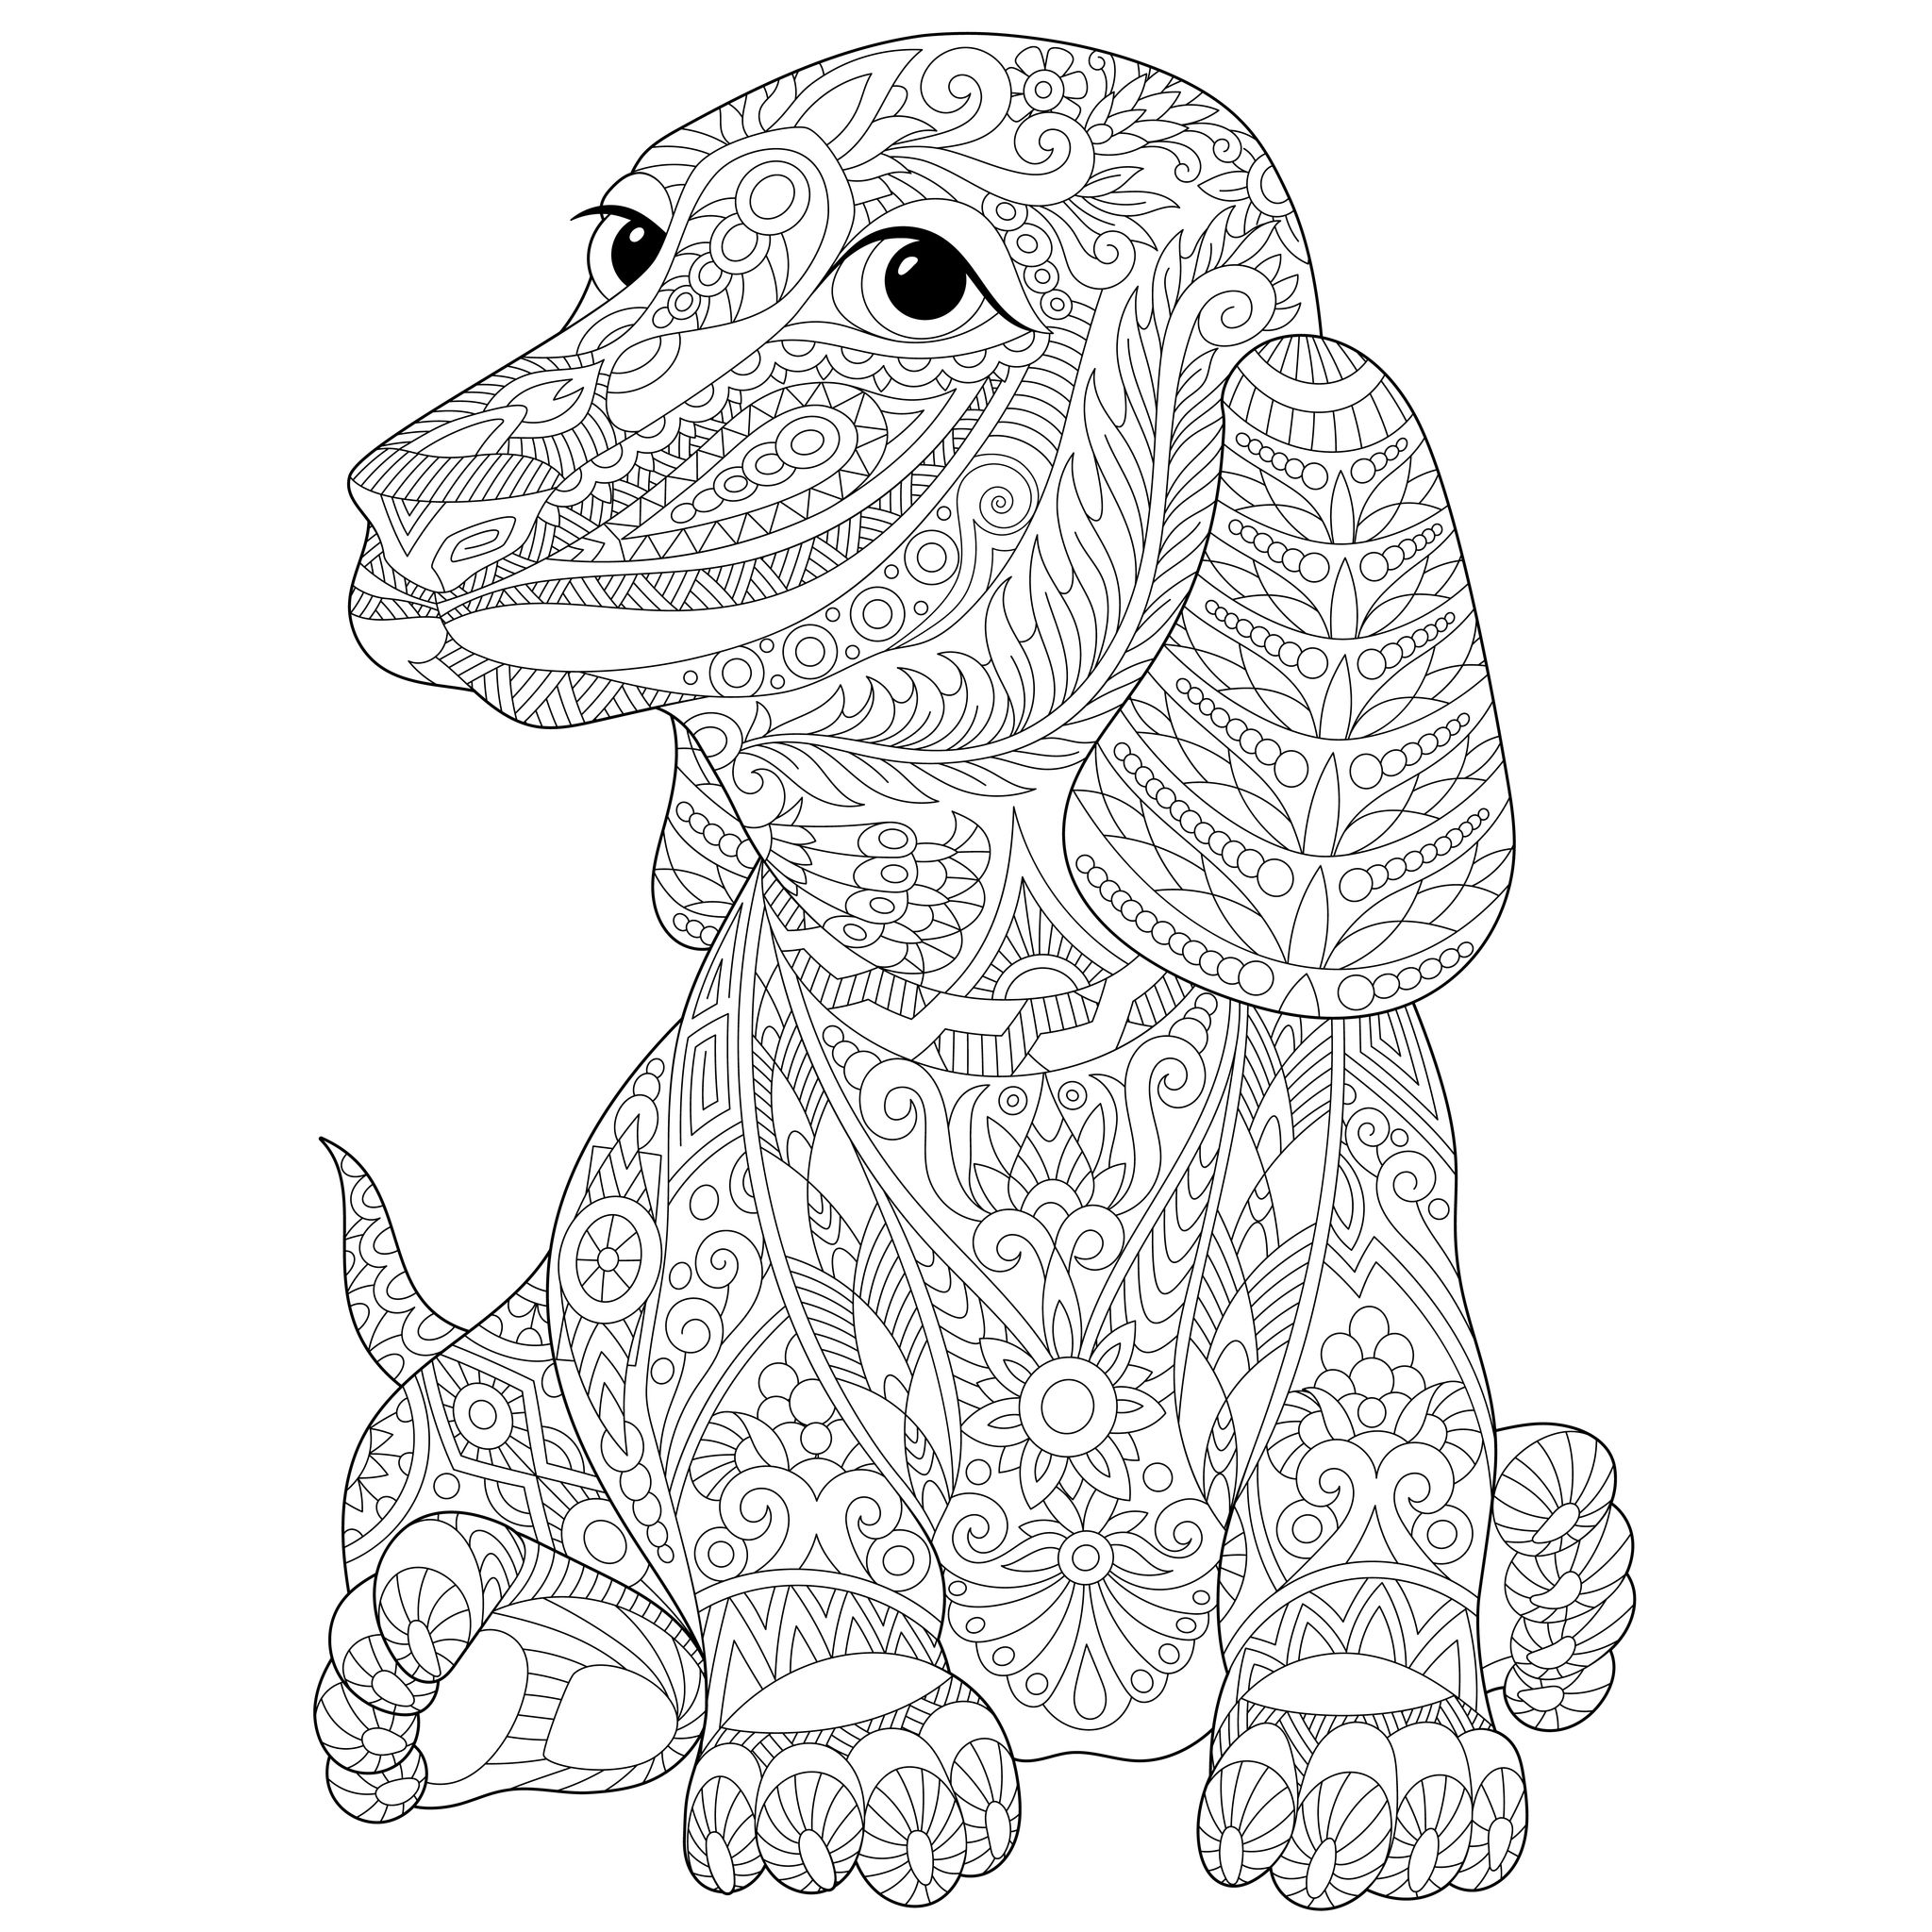 Desenhos incríveis para colorir de Cães para imprimir e colorir, Artista : Sybirko   Fonte : 123rf